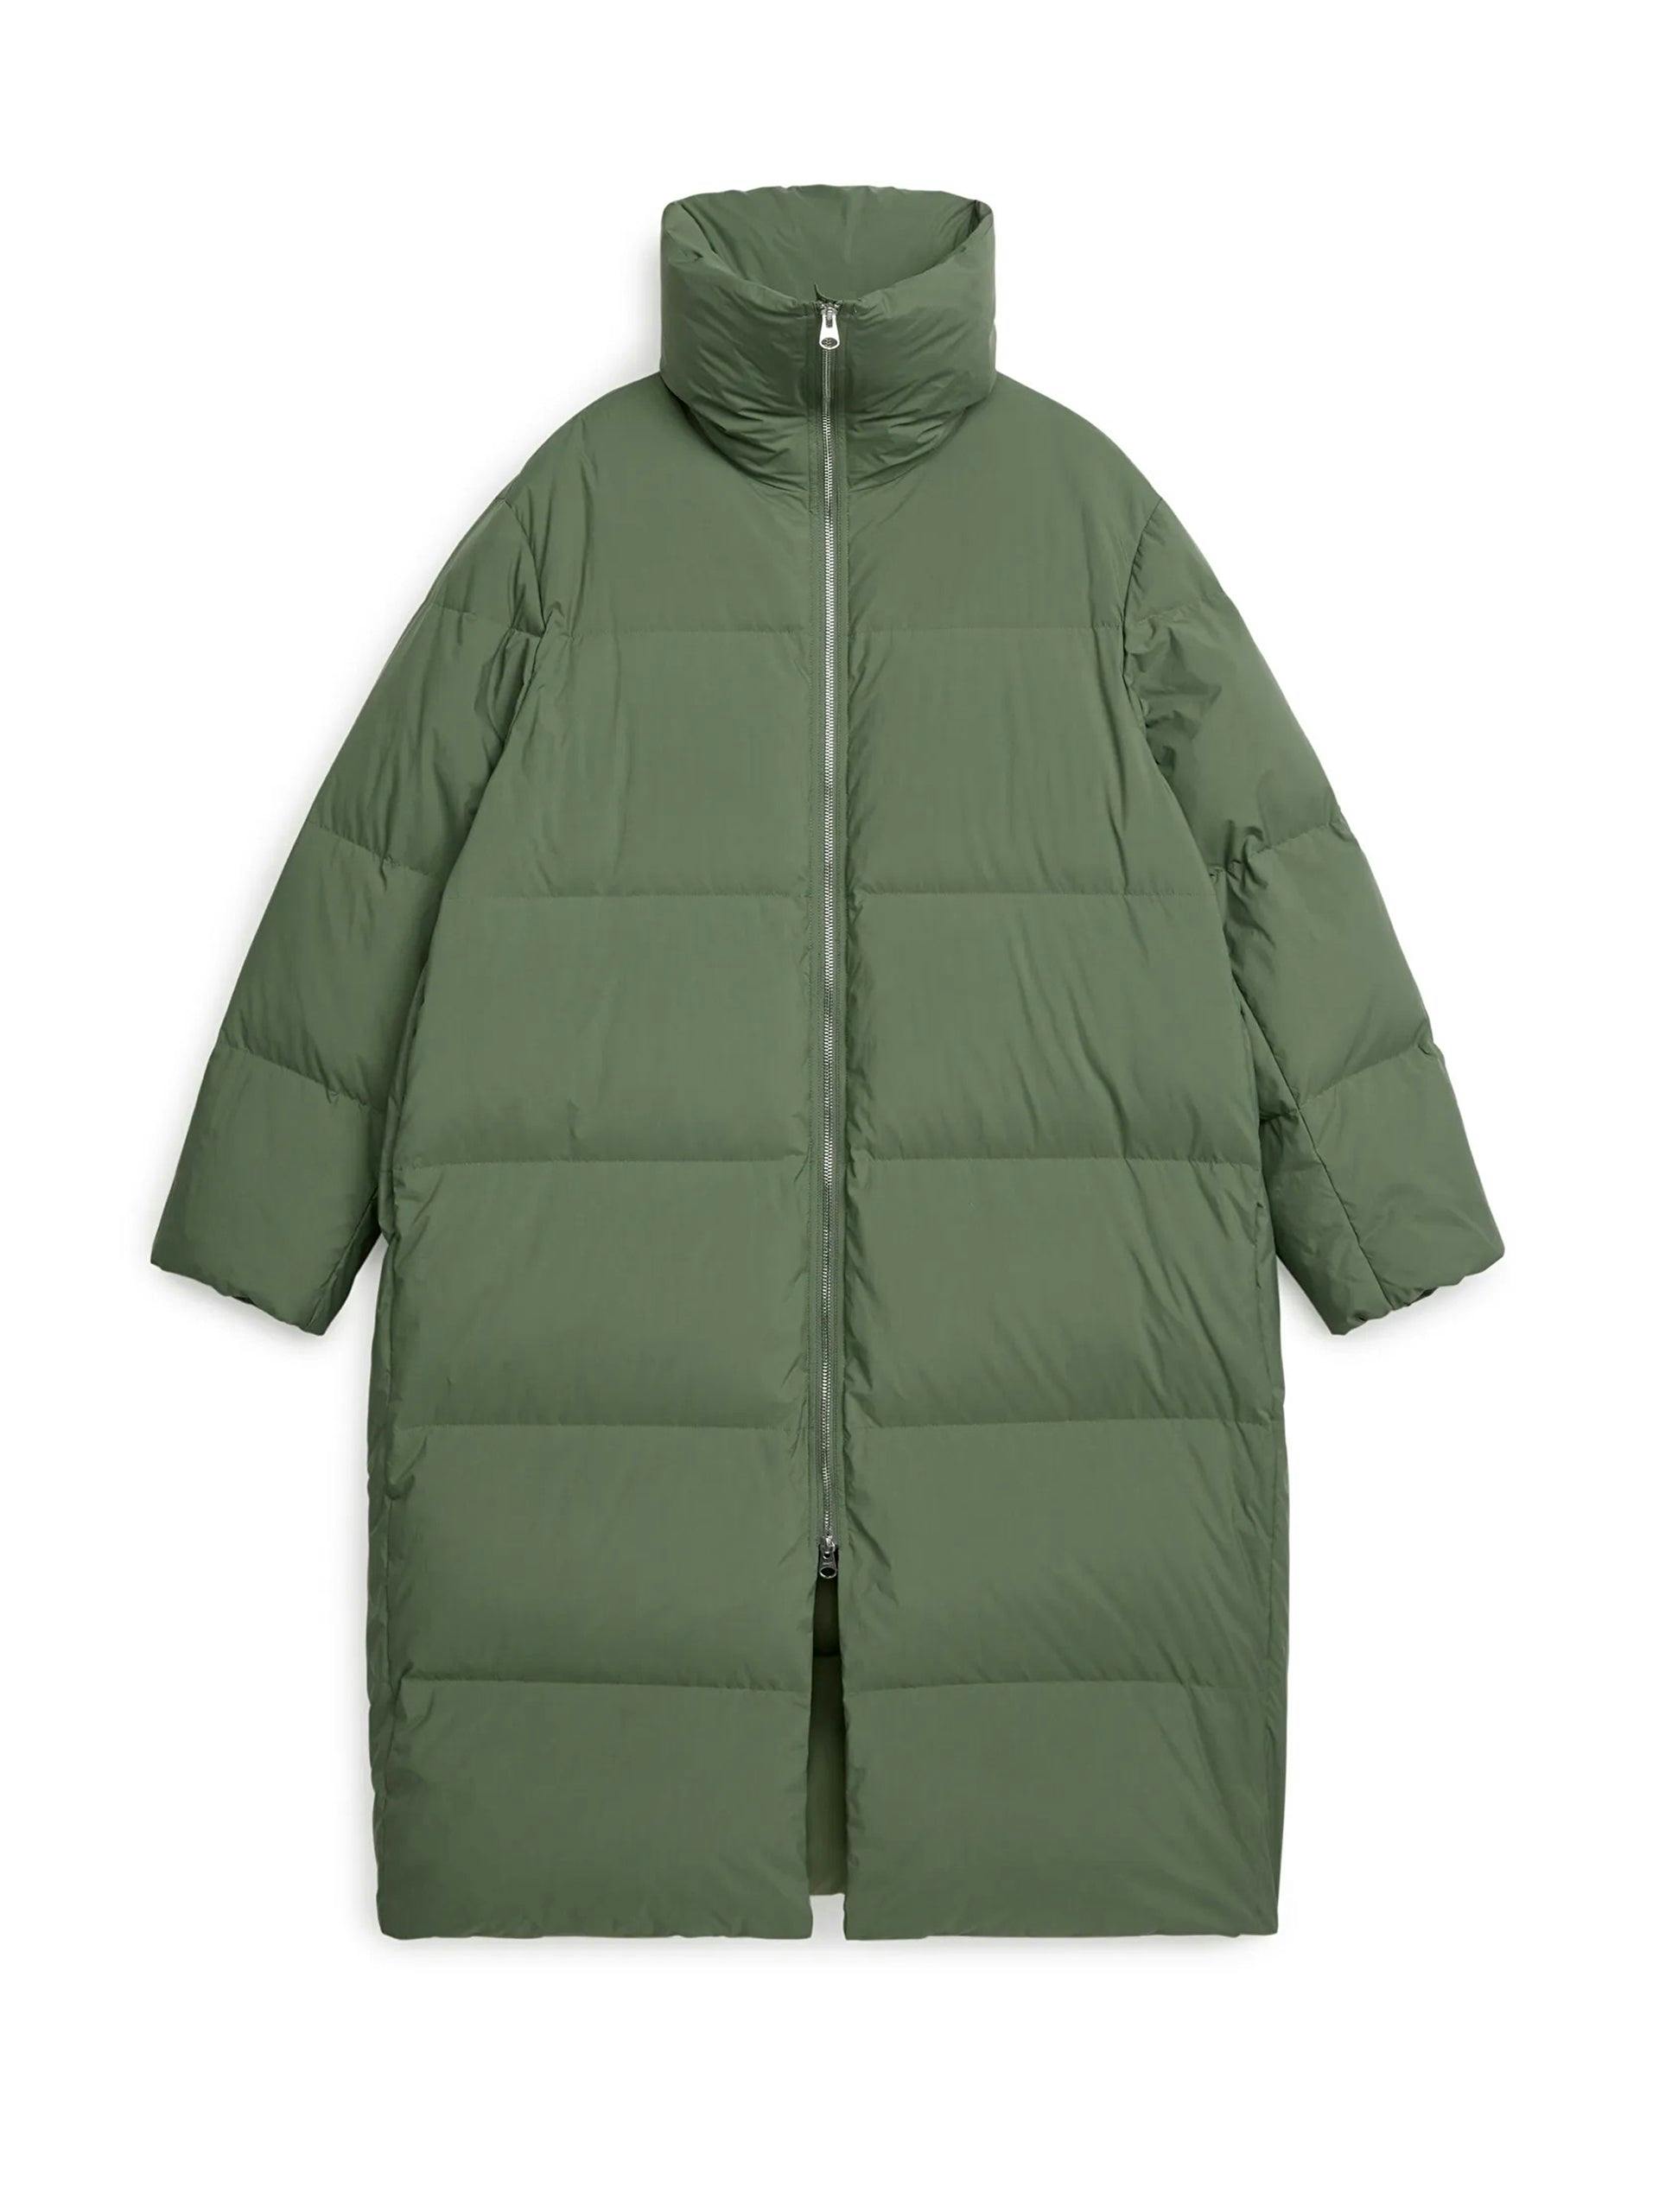 Green oversized puffer coat